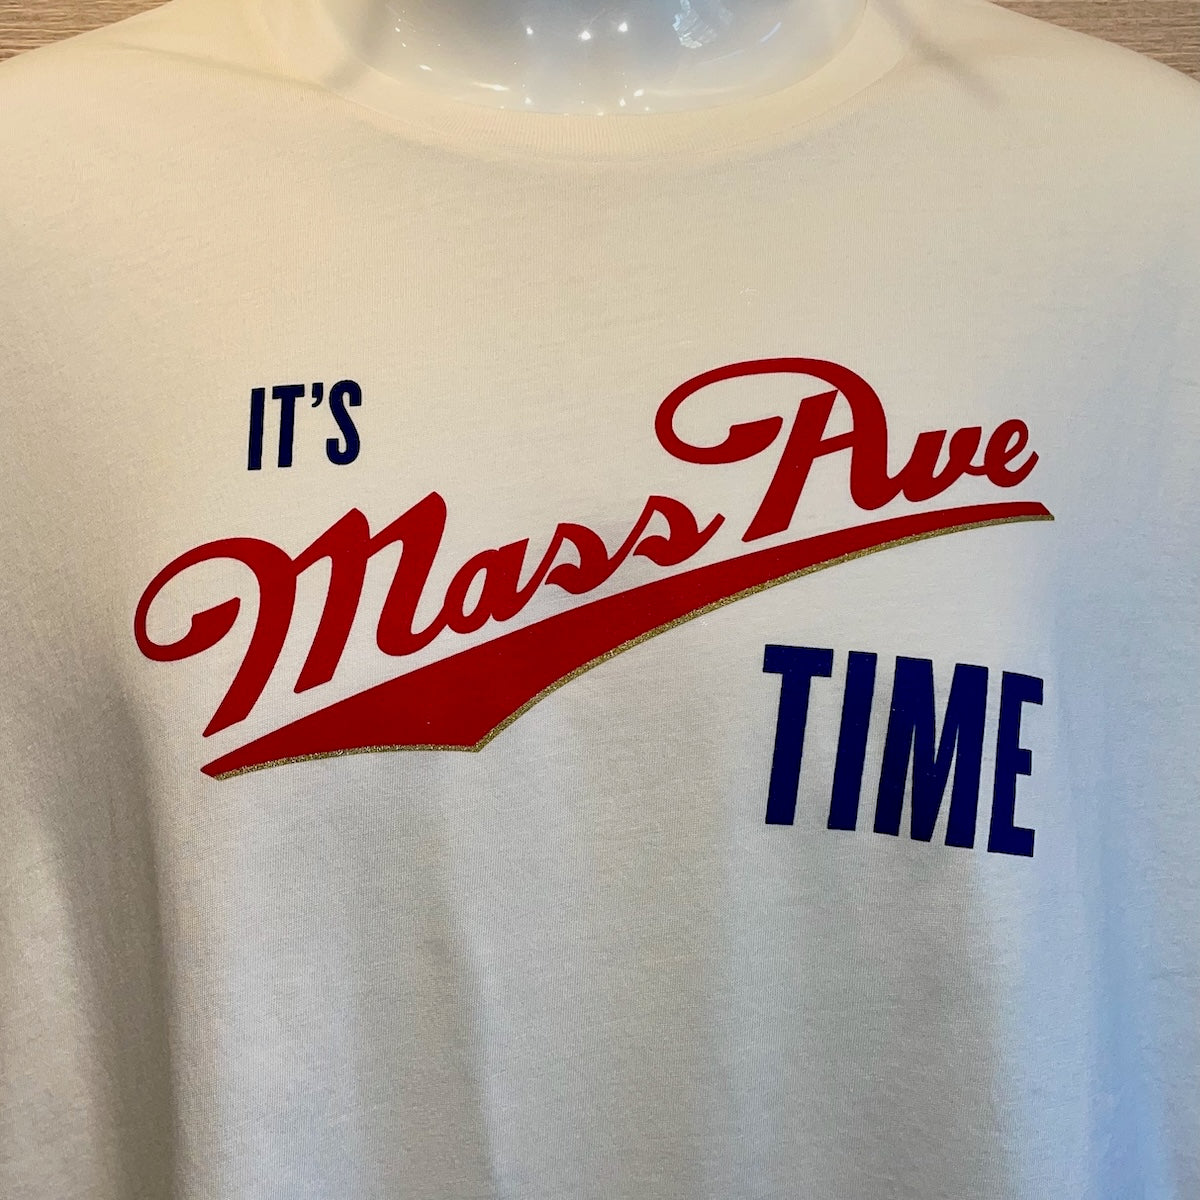 its mass ave time miller time t-shirt beer shirt